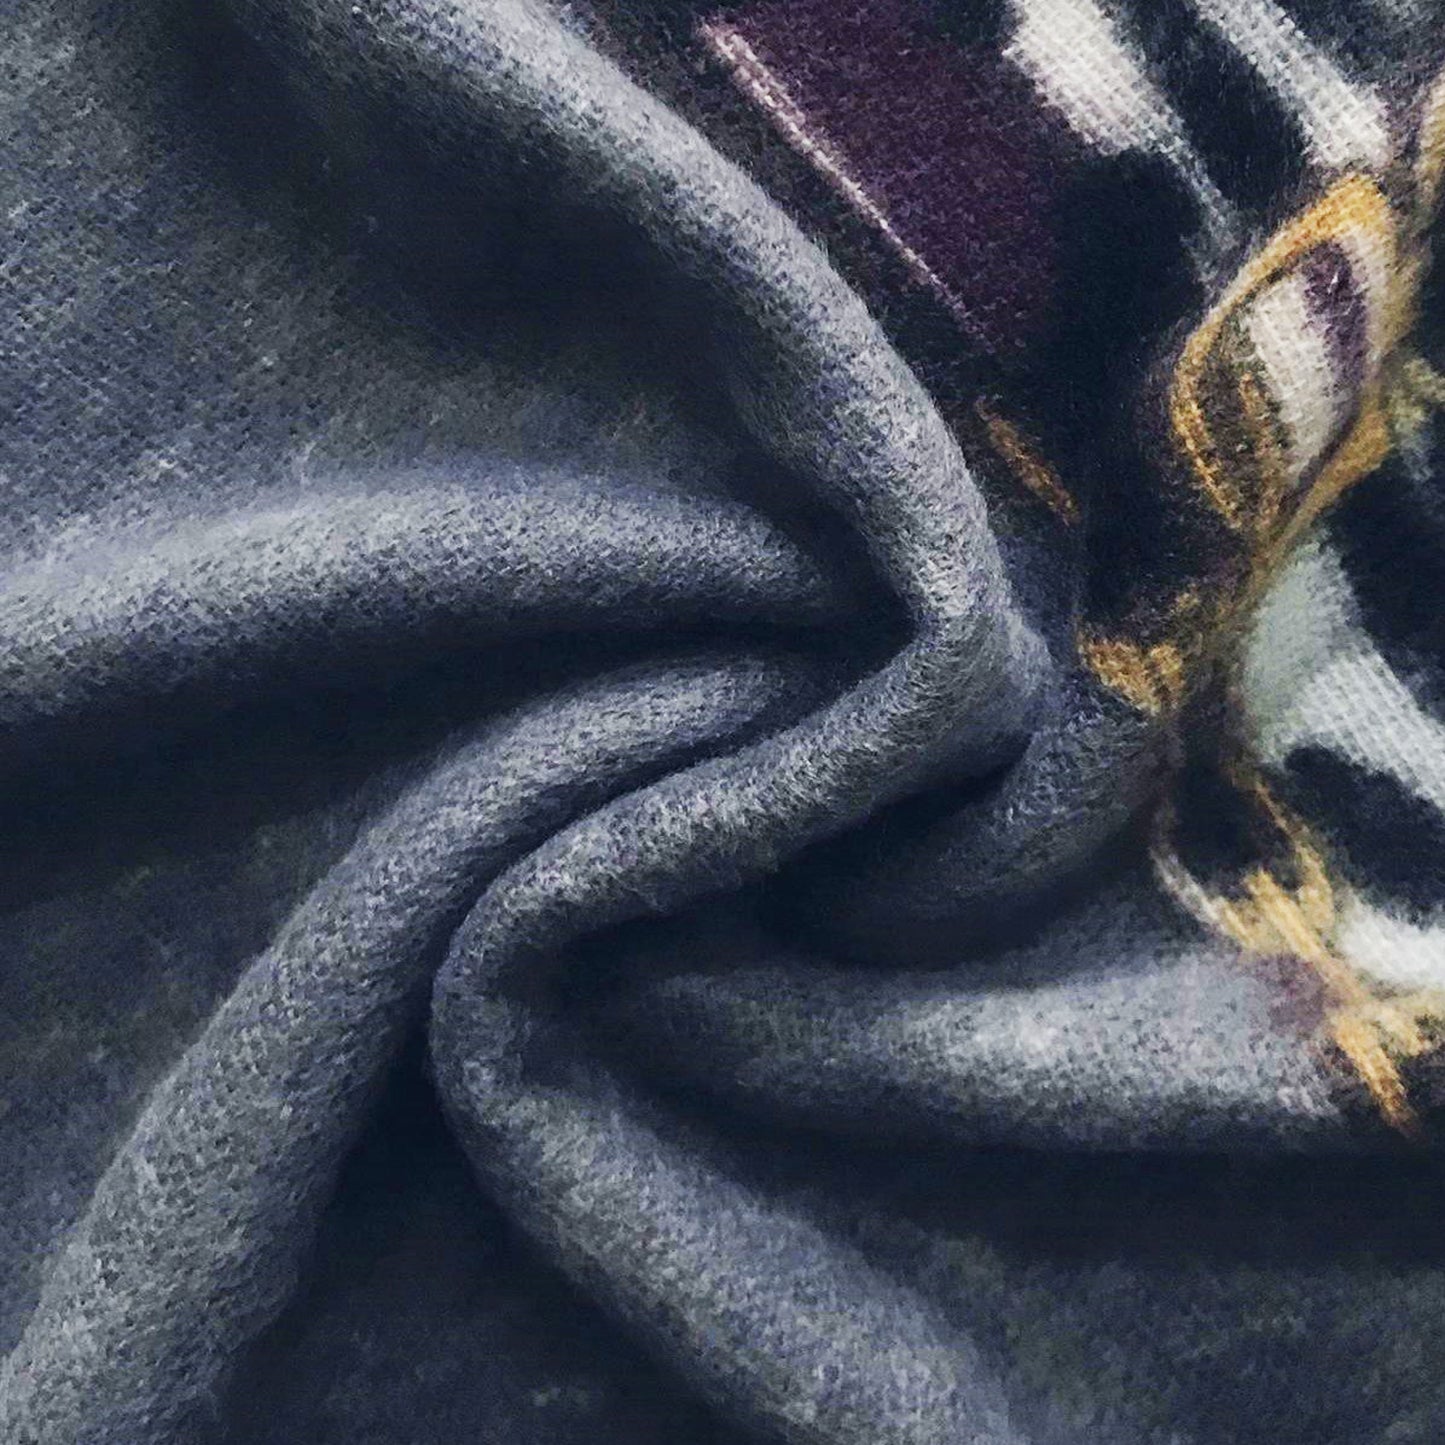 Vzorovaná Vlněná šála-šátek, 70 cm x 190 cm, Šedá | -80% Akce na Šperky